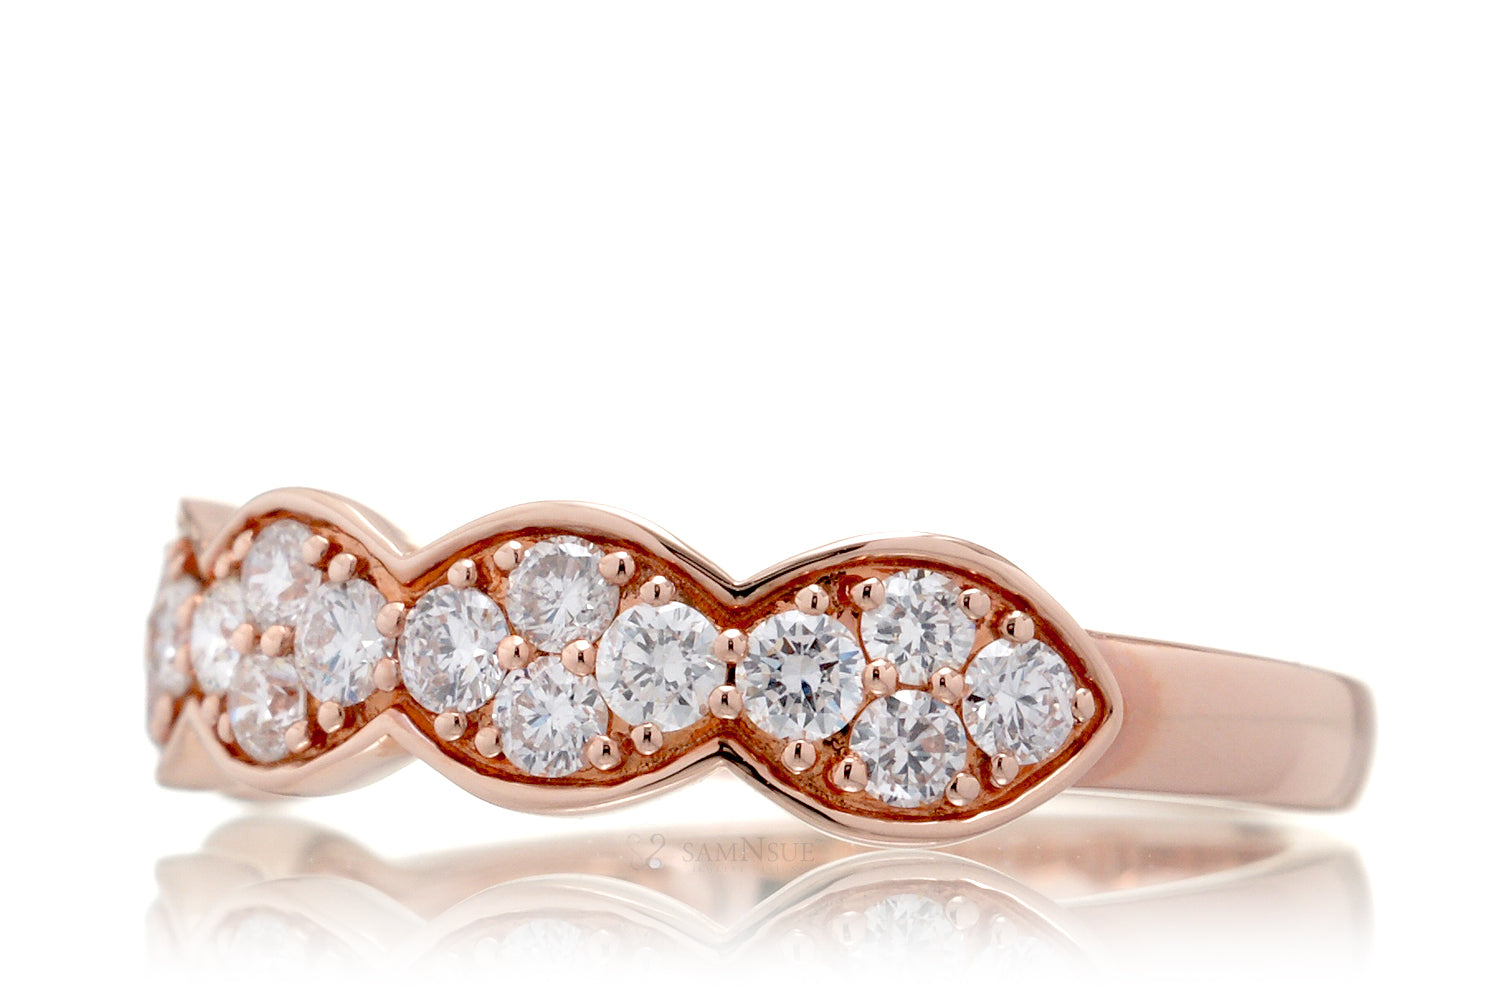 The Dianne Diamond Ring